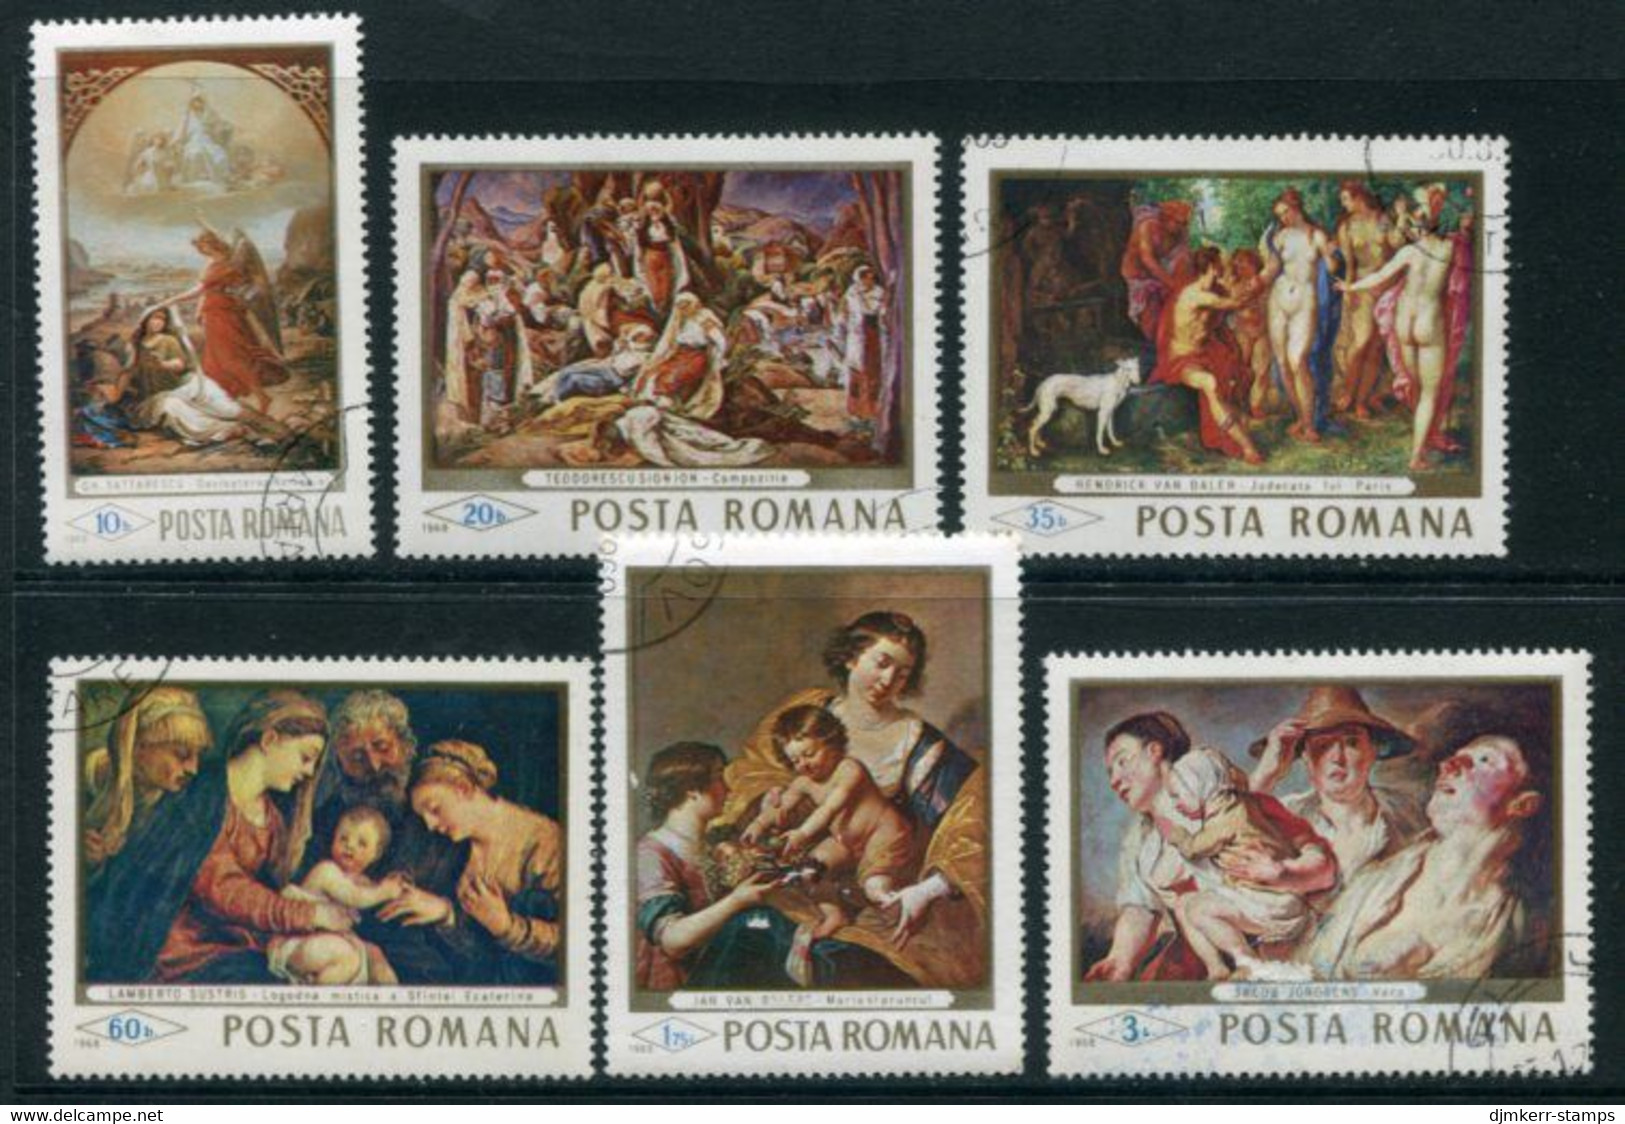 ROMANIA 1968 National Gallery Paintings  Used.   Michel 2706-11 - Usado